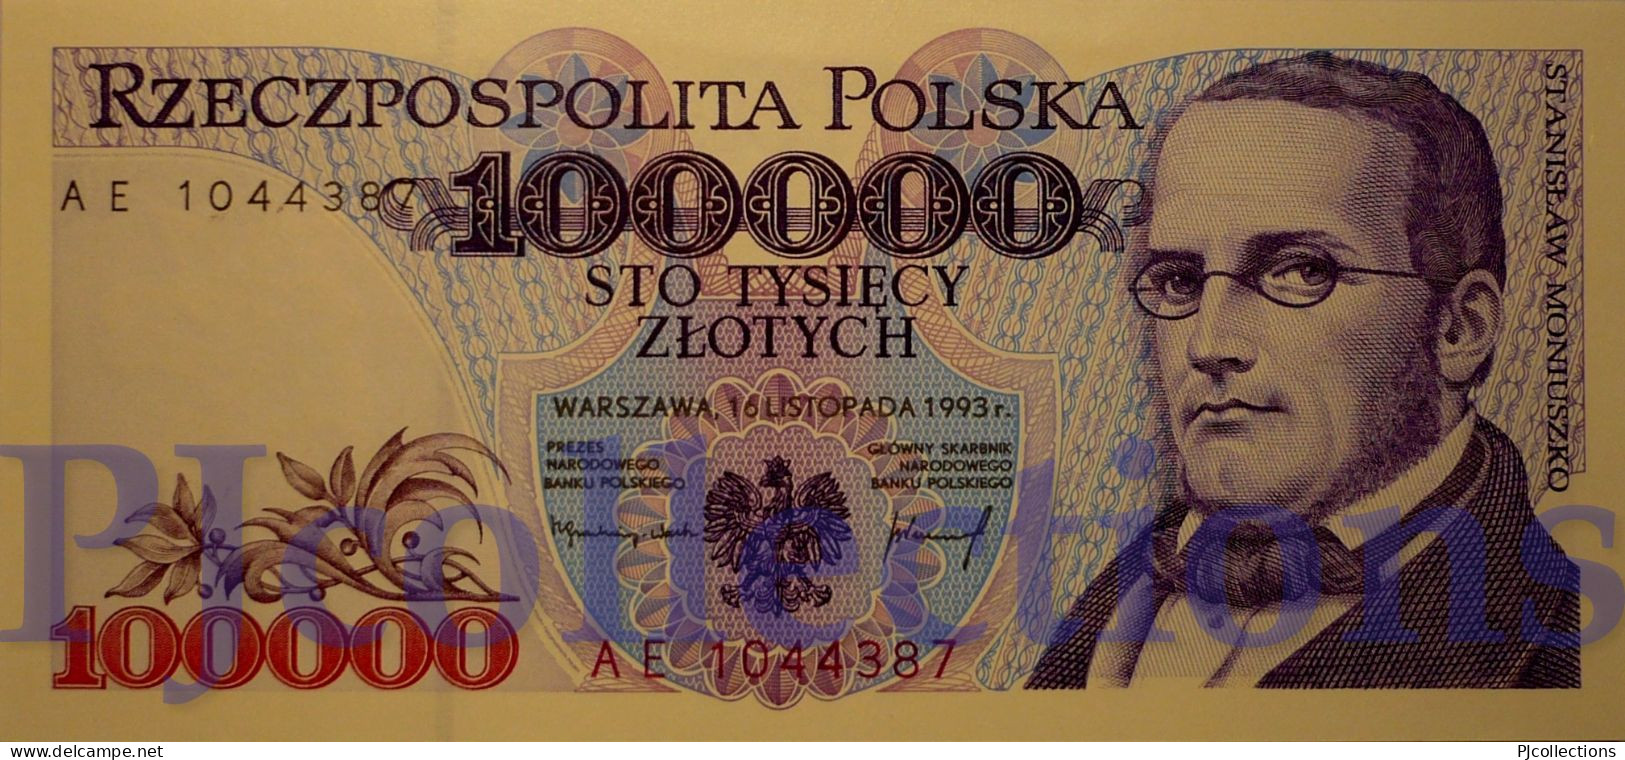 POLONIA - POLAND 100000 ZLOTYCH 1993 PICK 160a UNC PREFIX "AE" - Polen